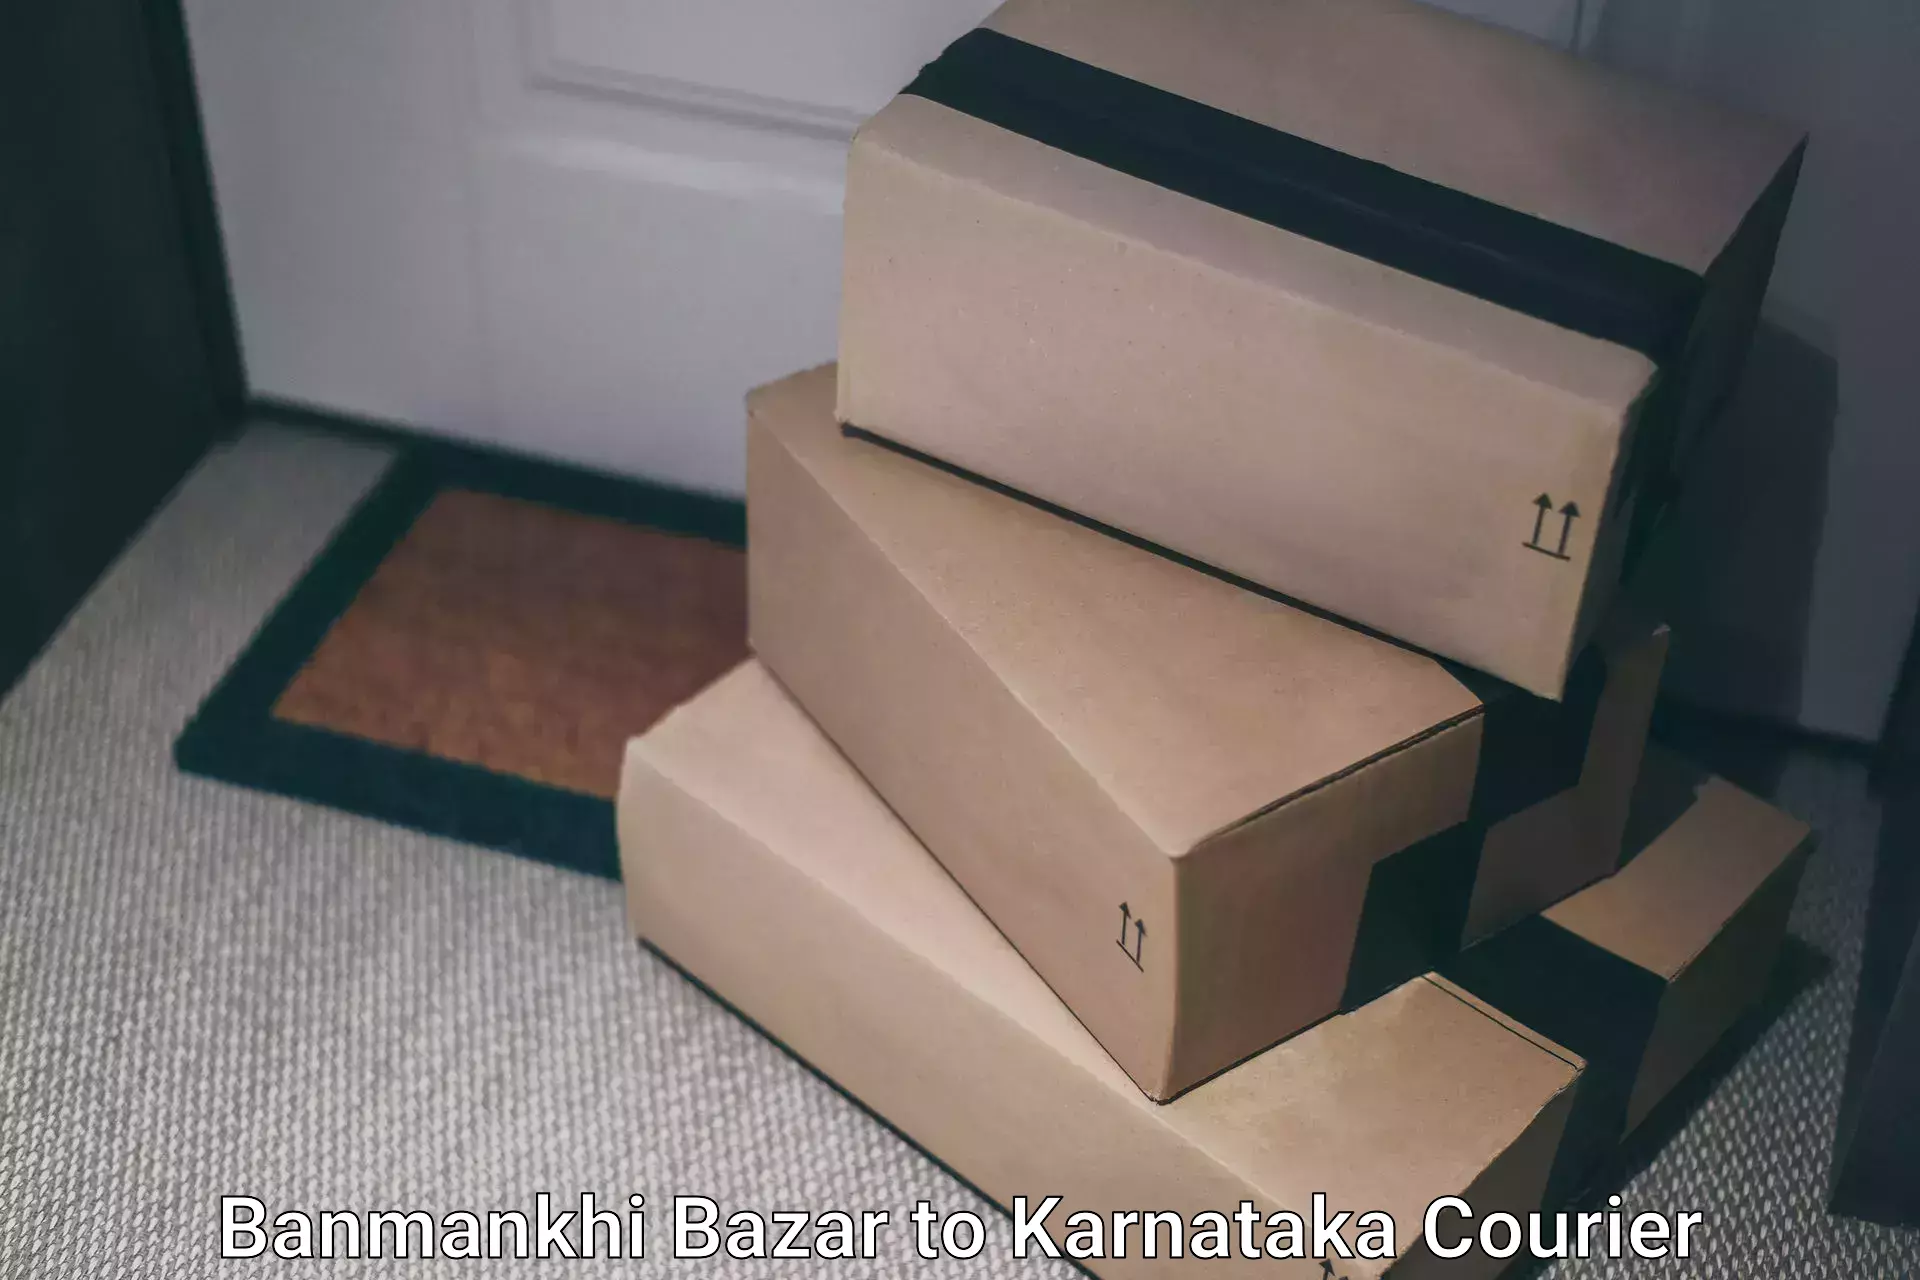 High-speed parcel service Banmankhi Bazar to Karnataka